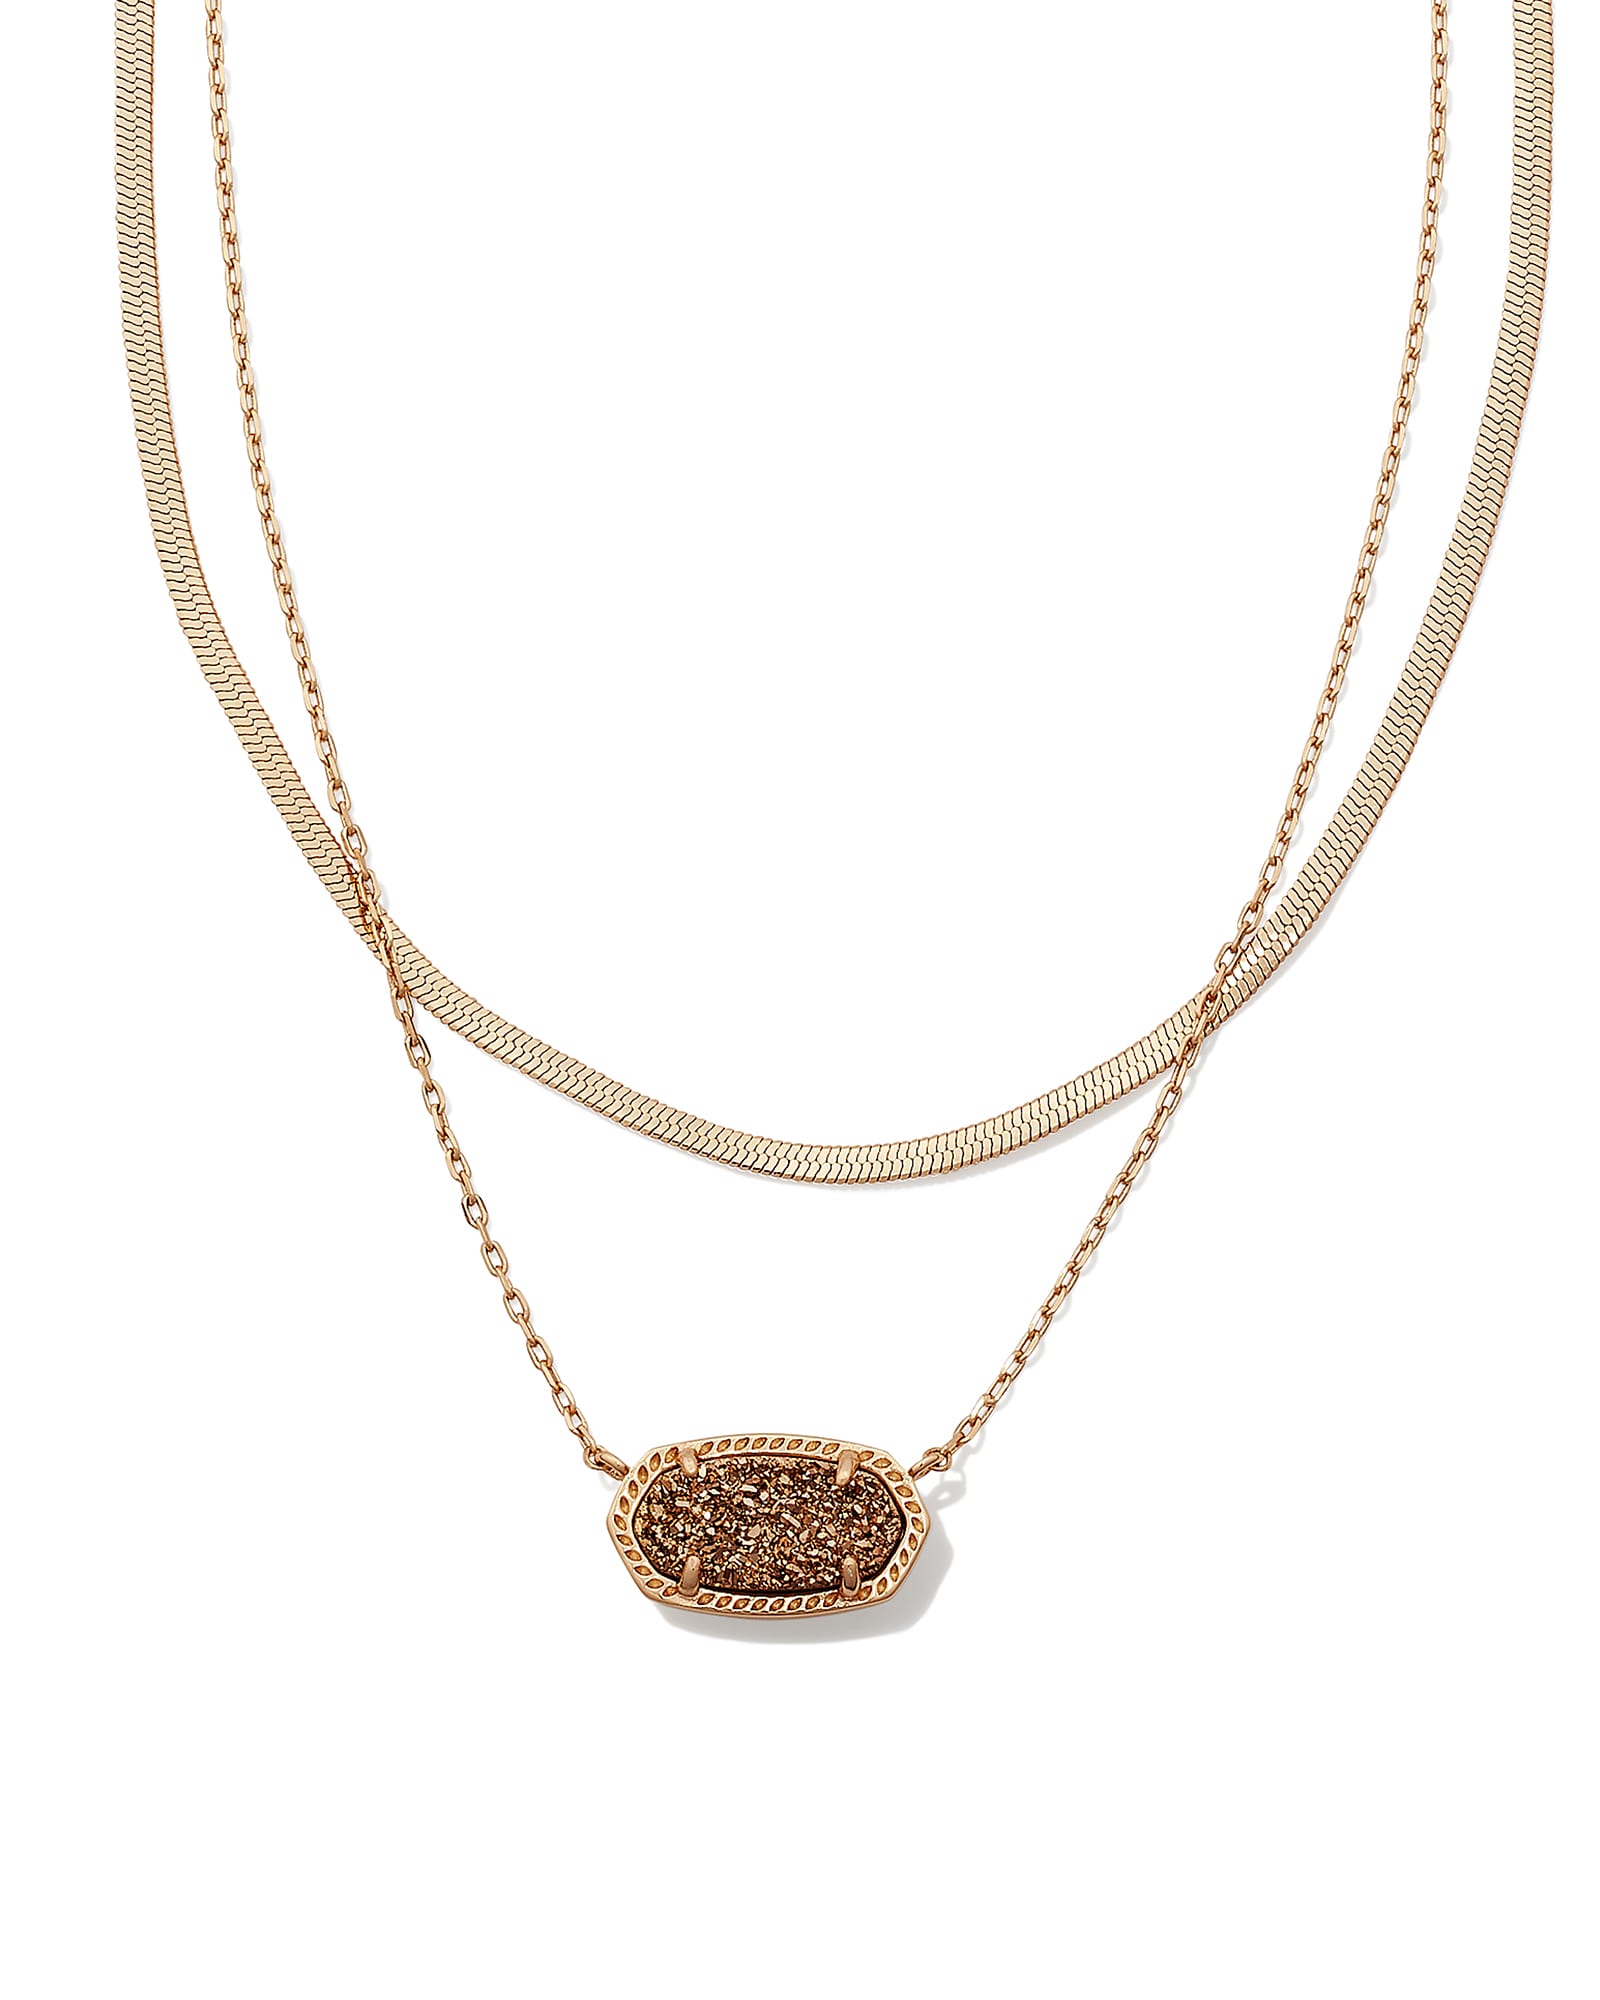 KENDRA SCOTT- Elisa Herringbone Rose Gold Multi Strand Necklace in Rose Gold Drusy